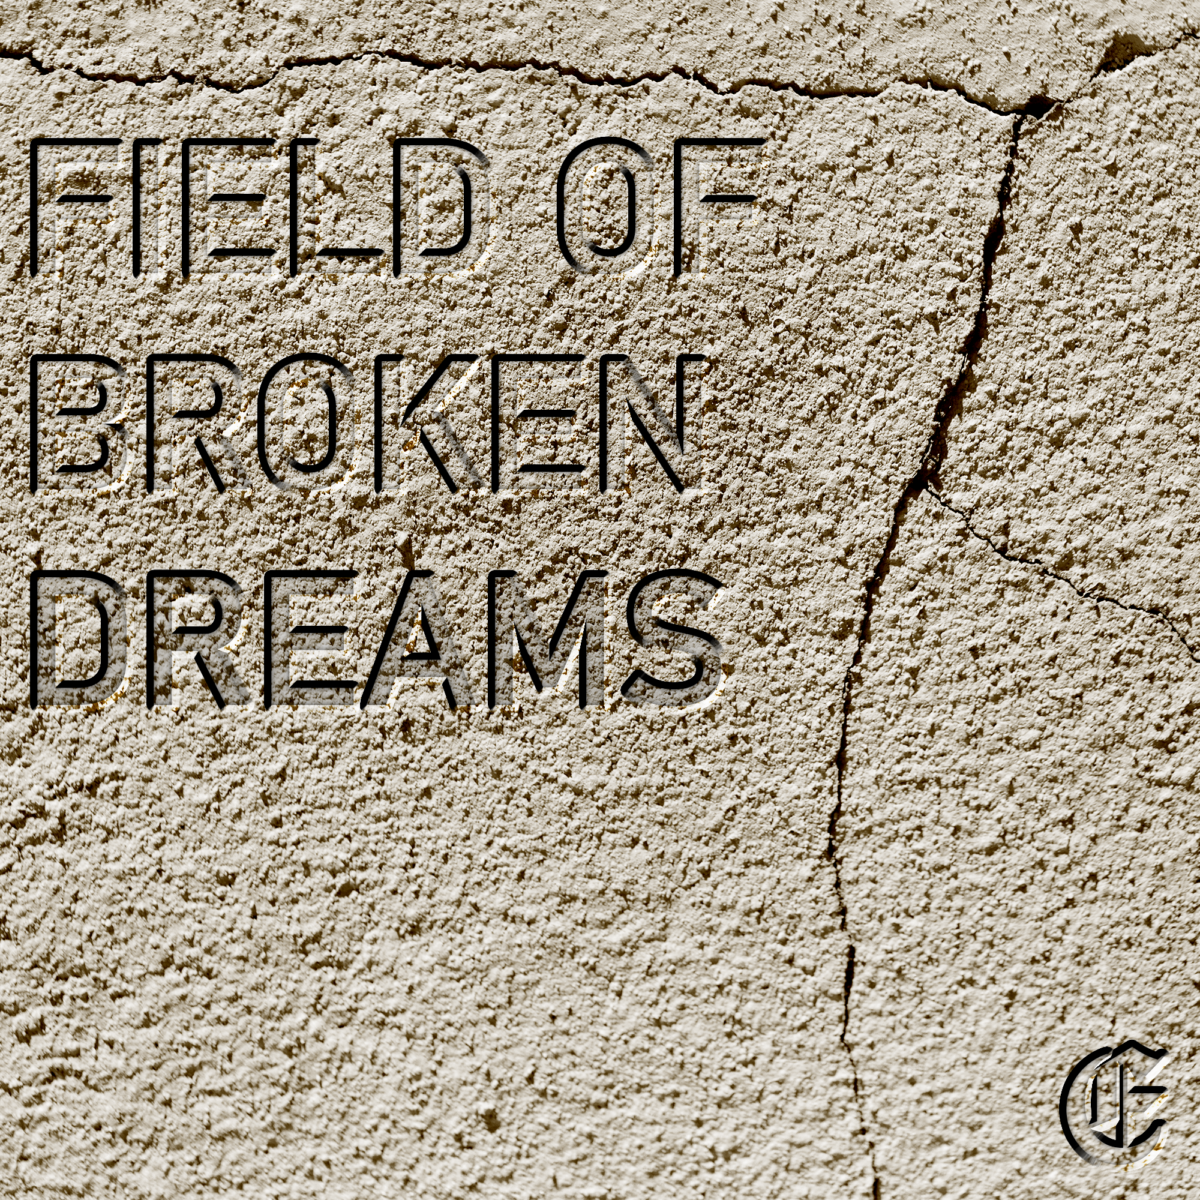 The Field of Broken Dreams | Episode 9: The End